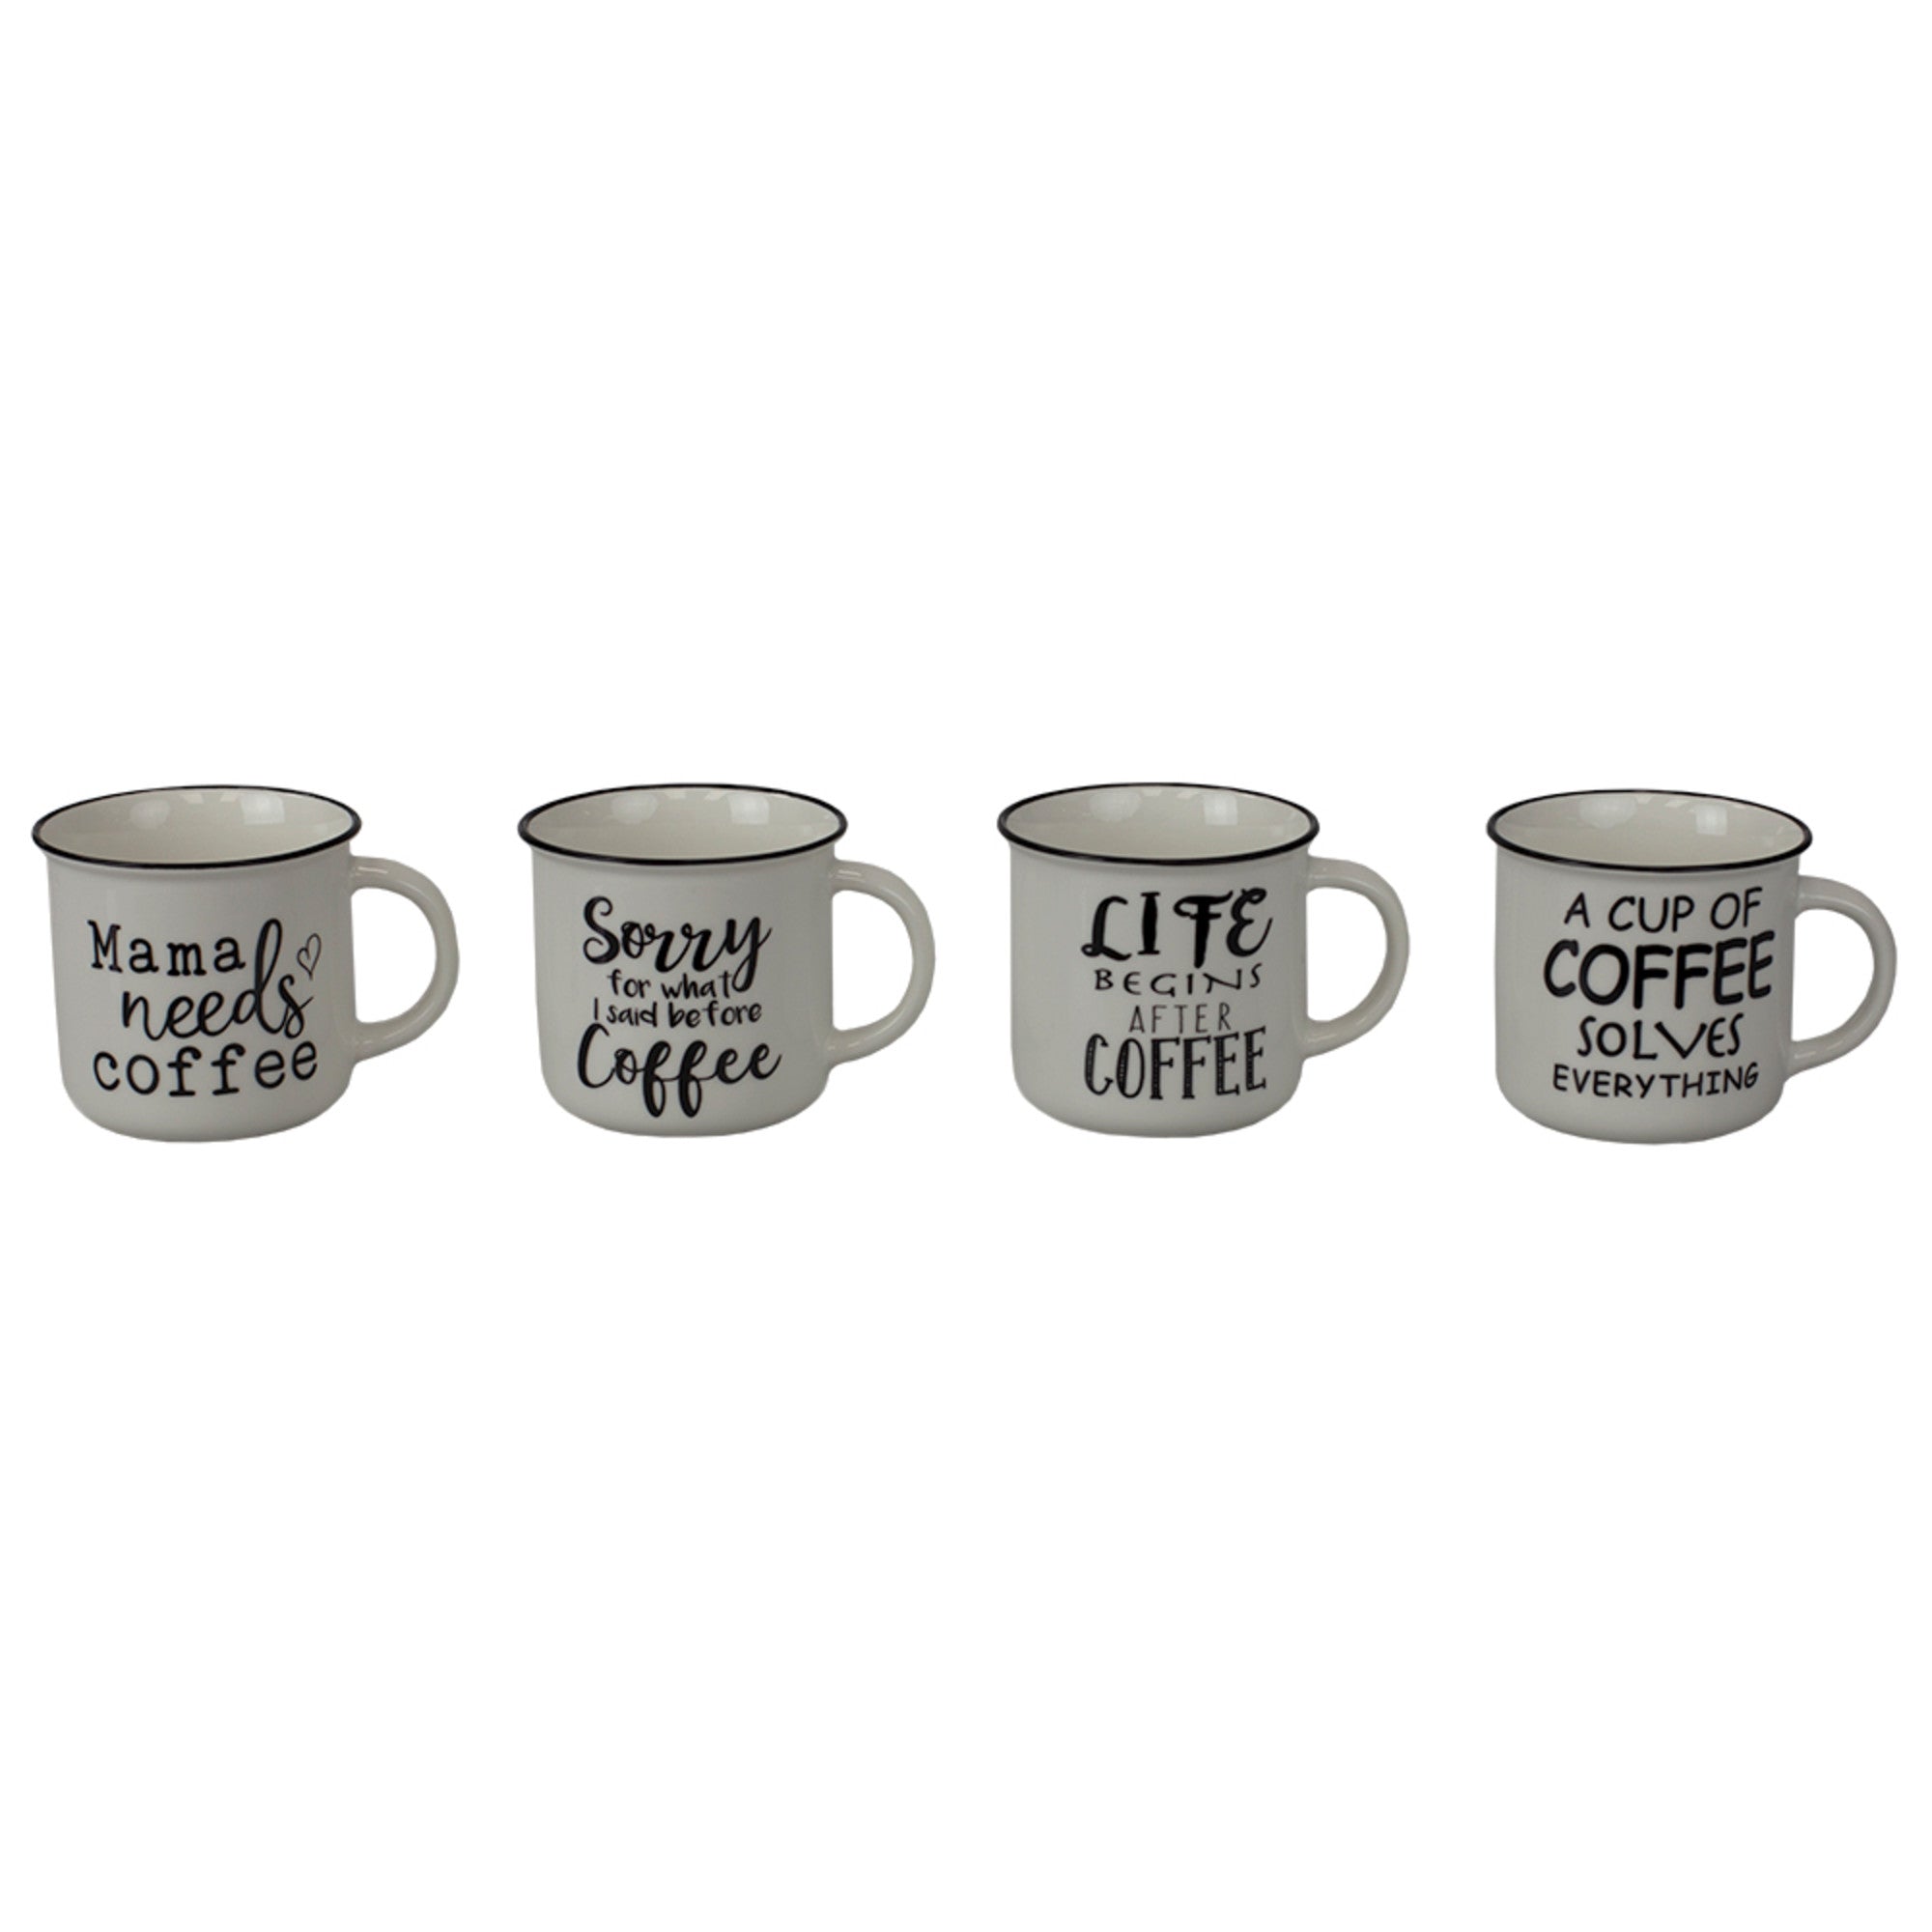 Home Basics Coffee Solves Everything 13 oz. Bone China Mug - Assorted Colors